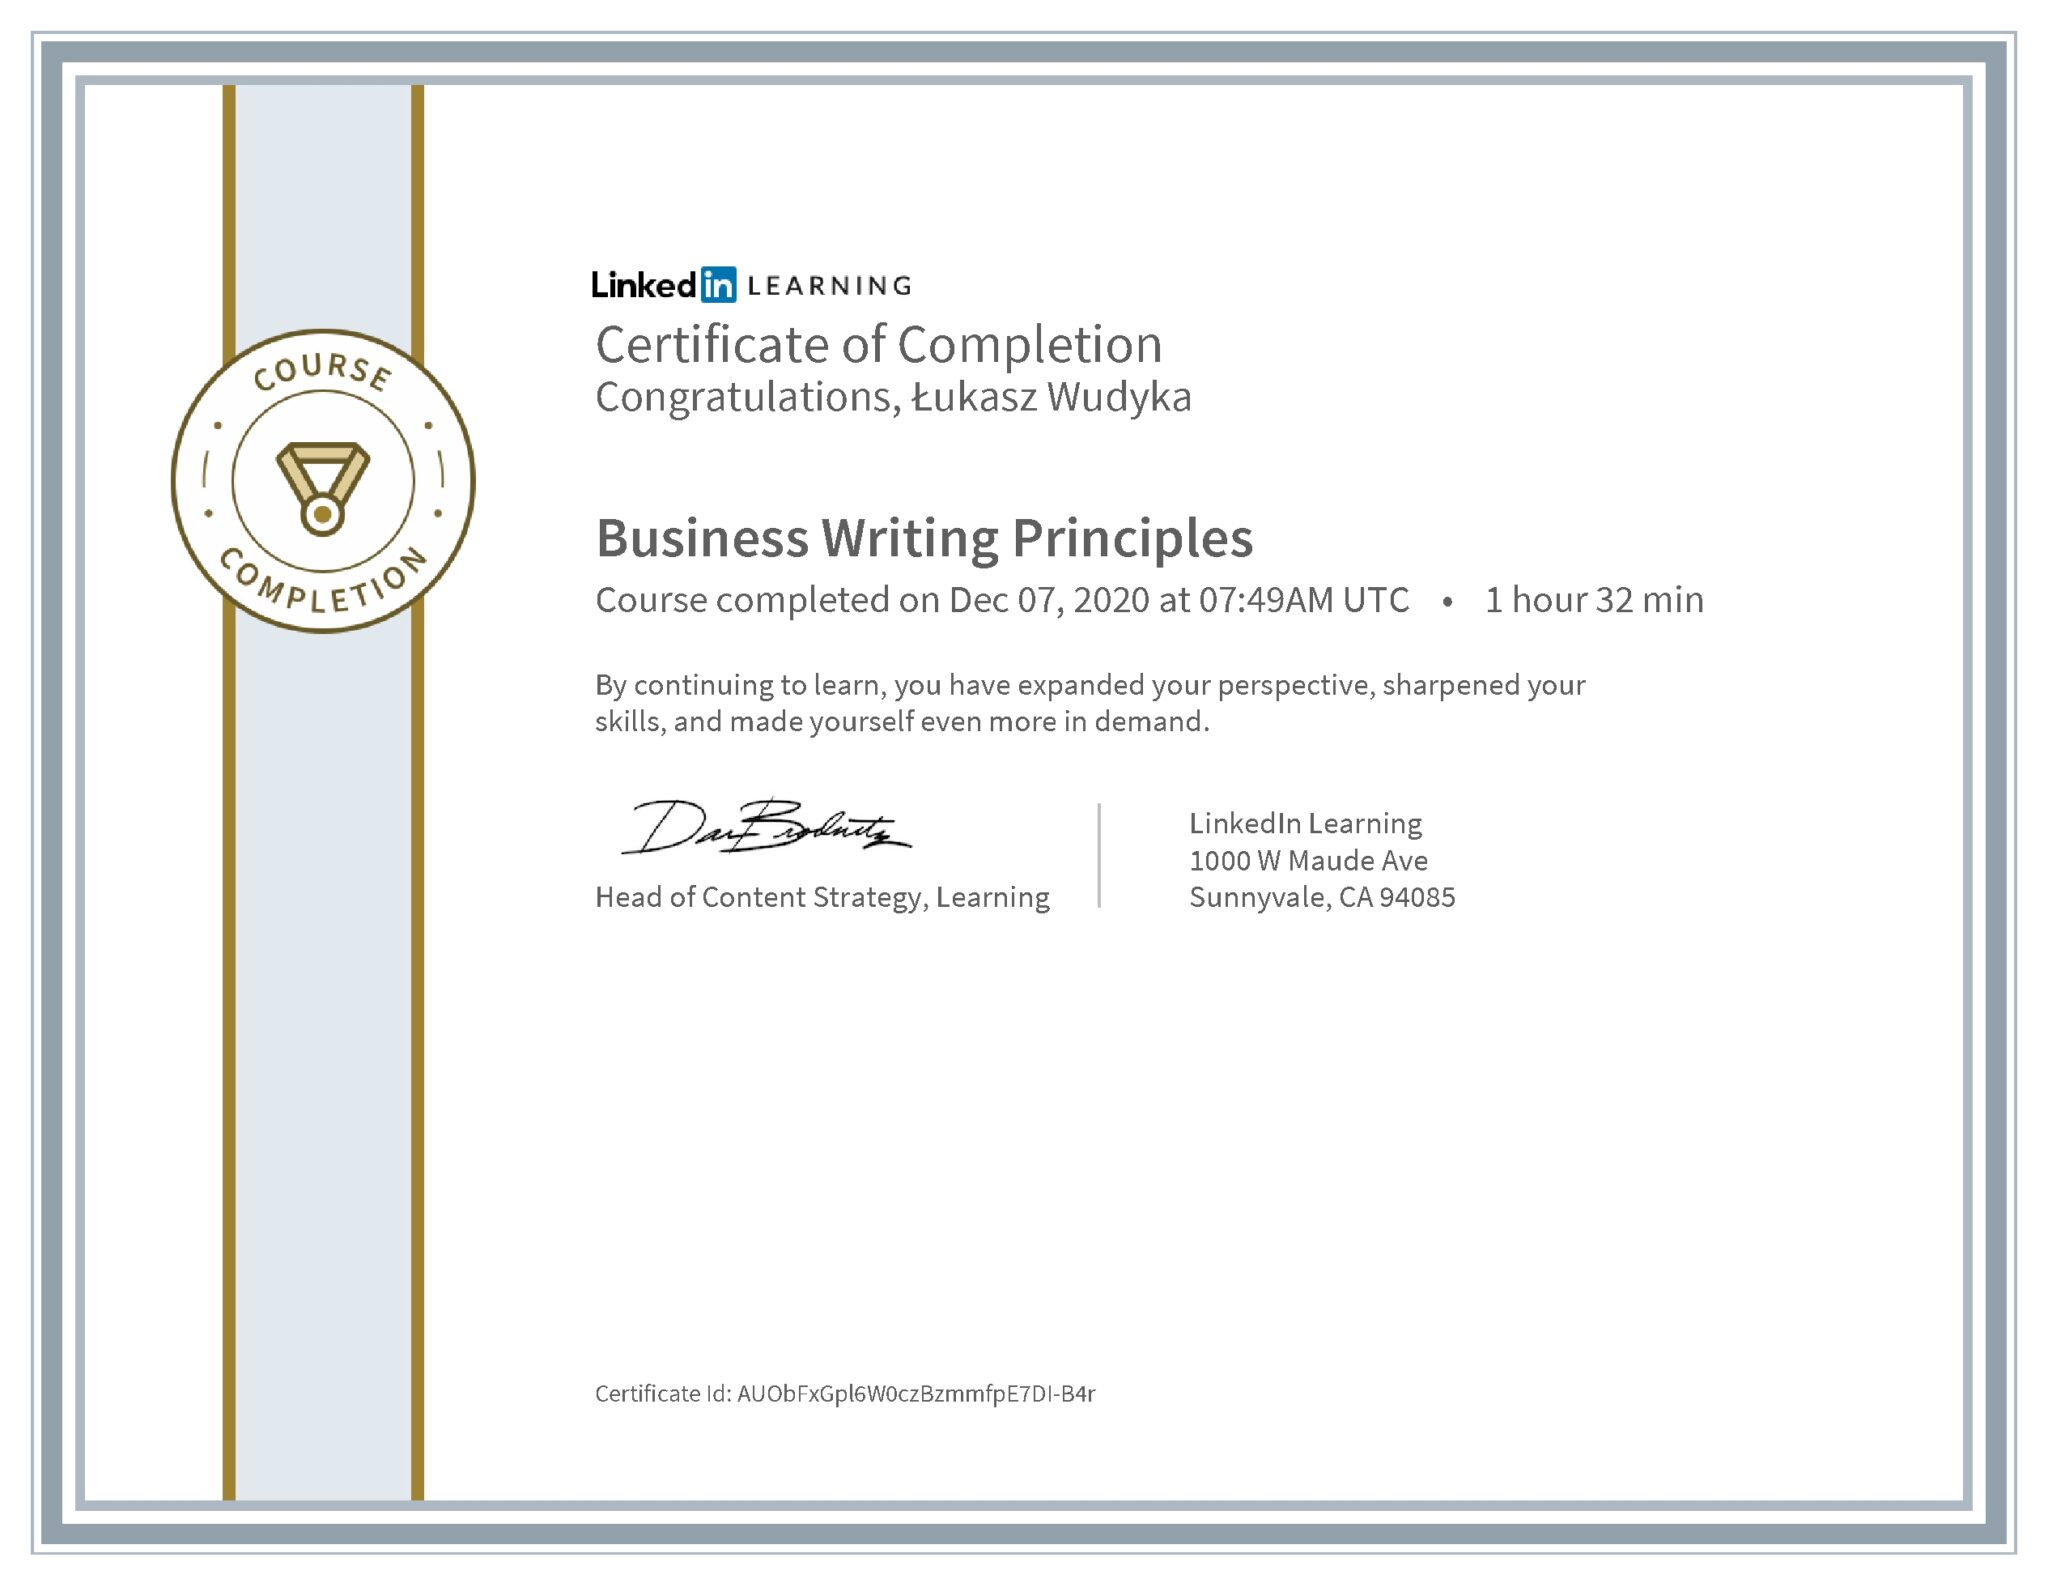 Łukasz Wudyka certyfikat LinkedIn Business Writing Principles